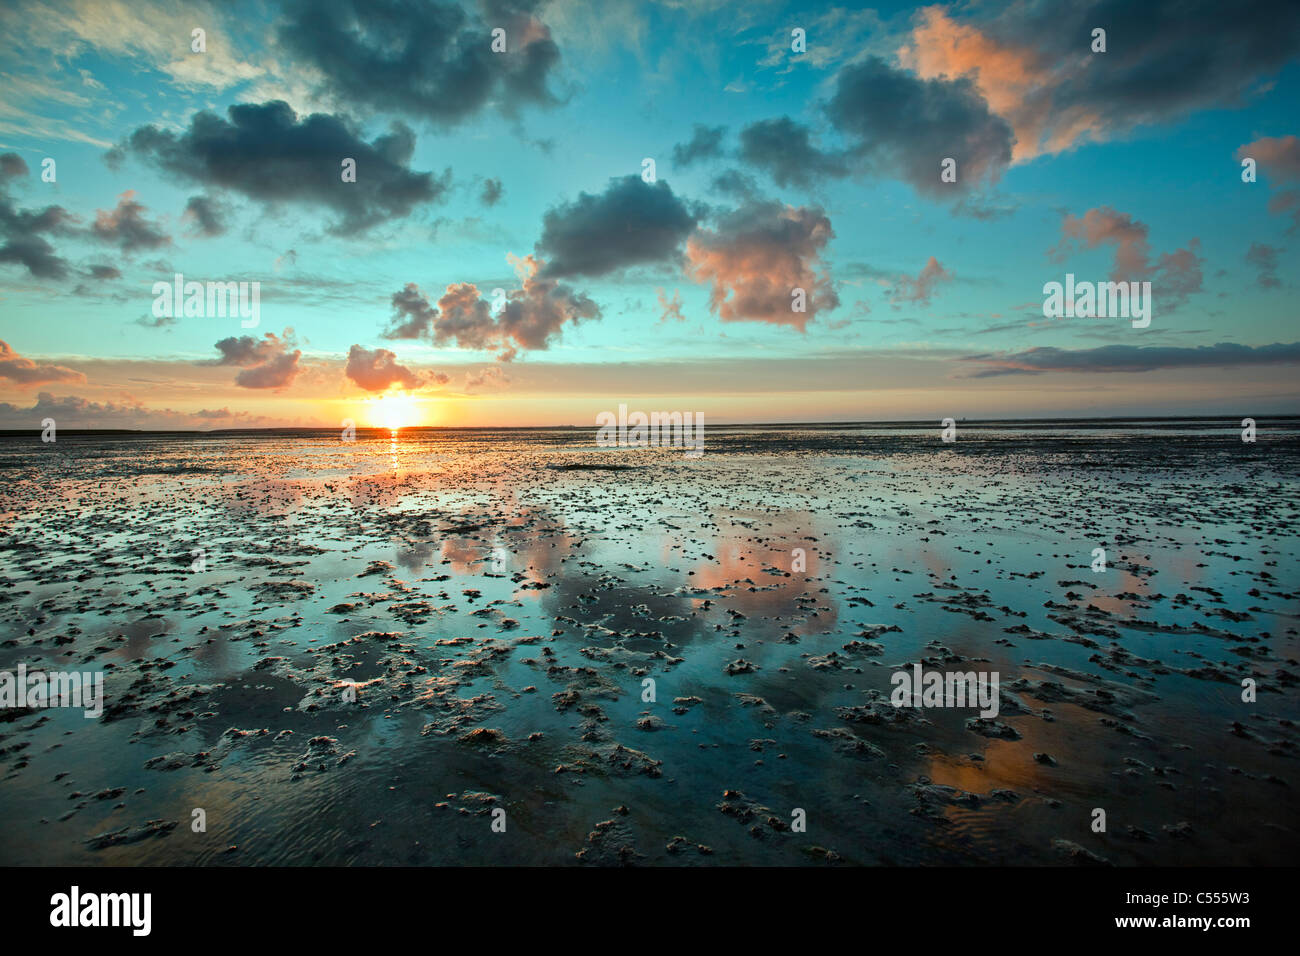 Die Niederlande, Buren, Ameland Insel, gehört zum Wadden Sea Islands. UNESCO-Weltkulturerbe. Watten. Sunrise. Stockfoto